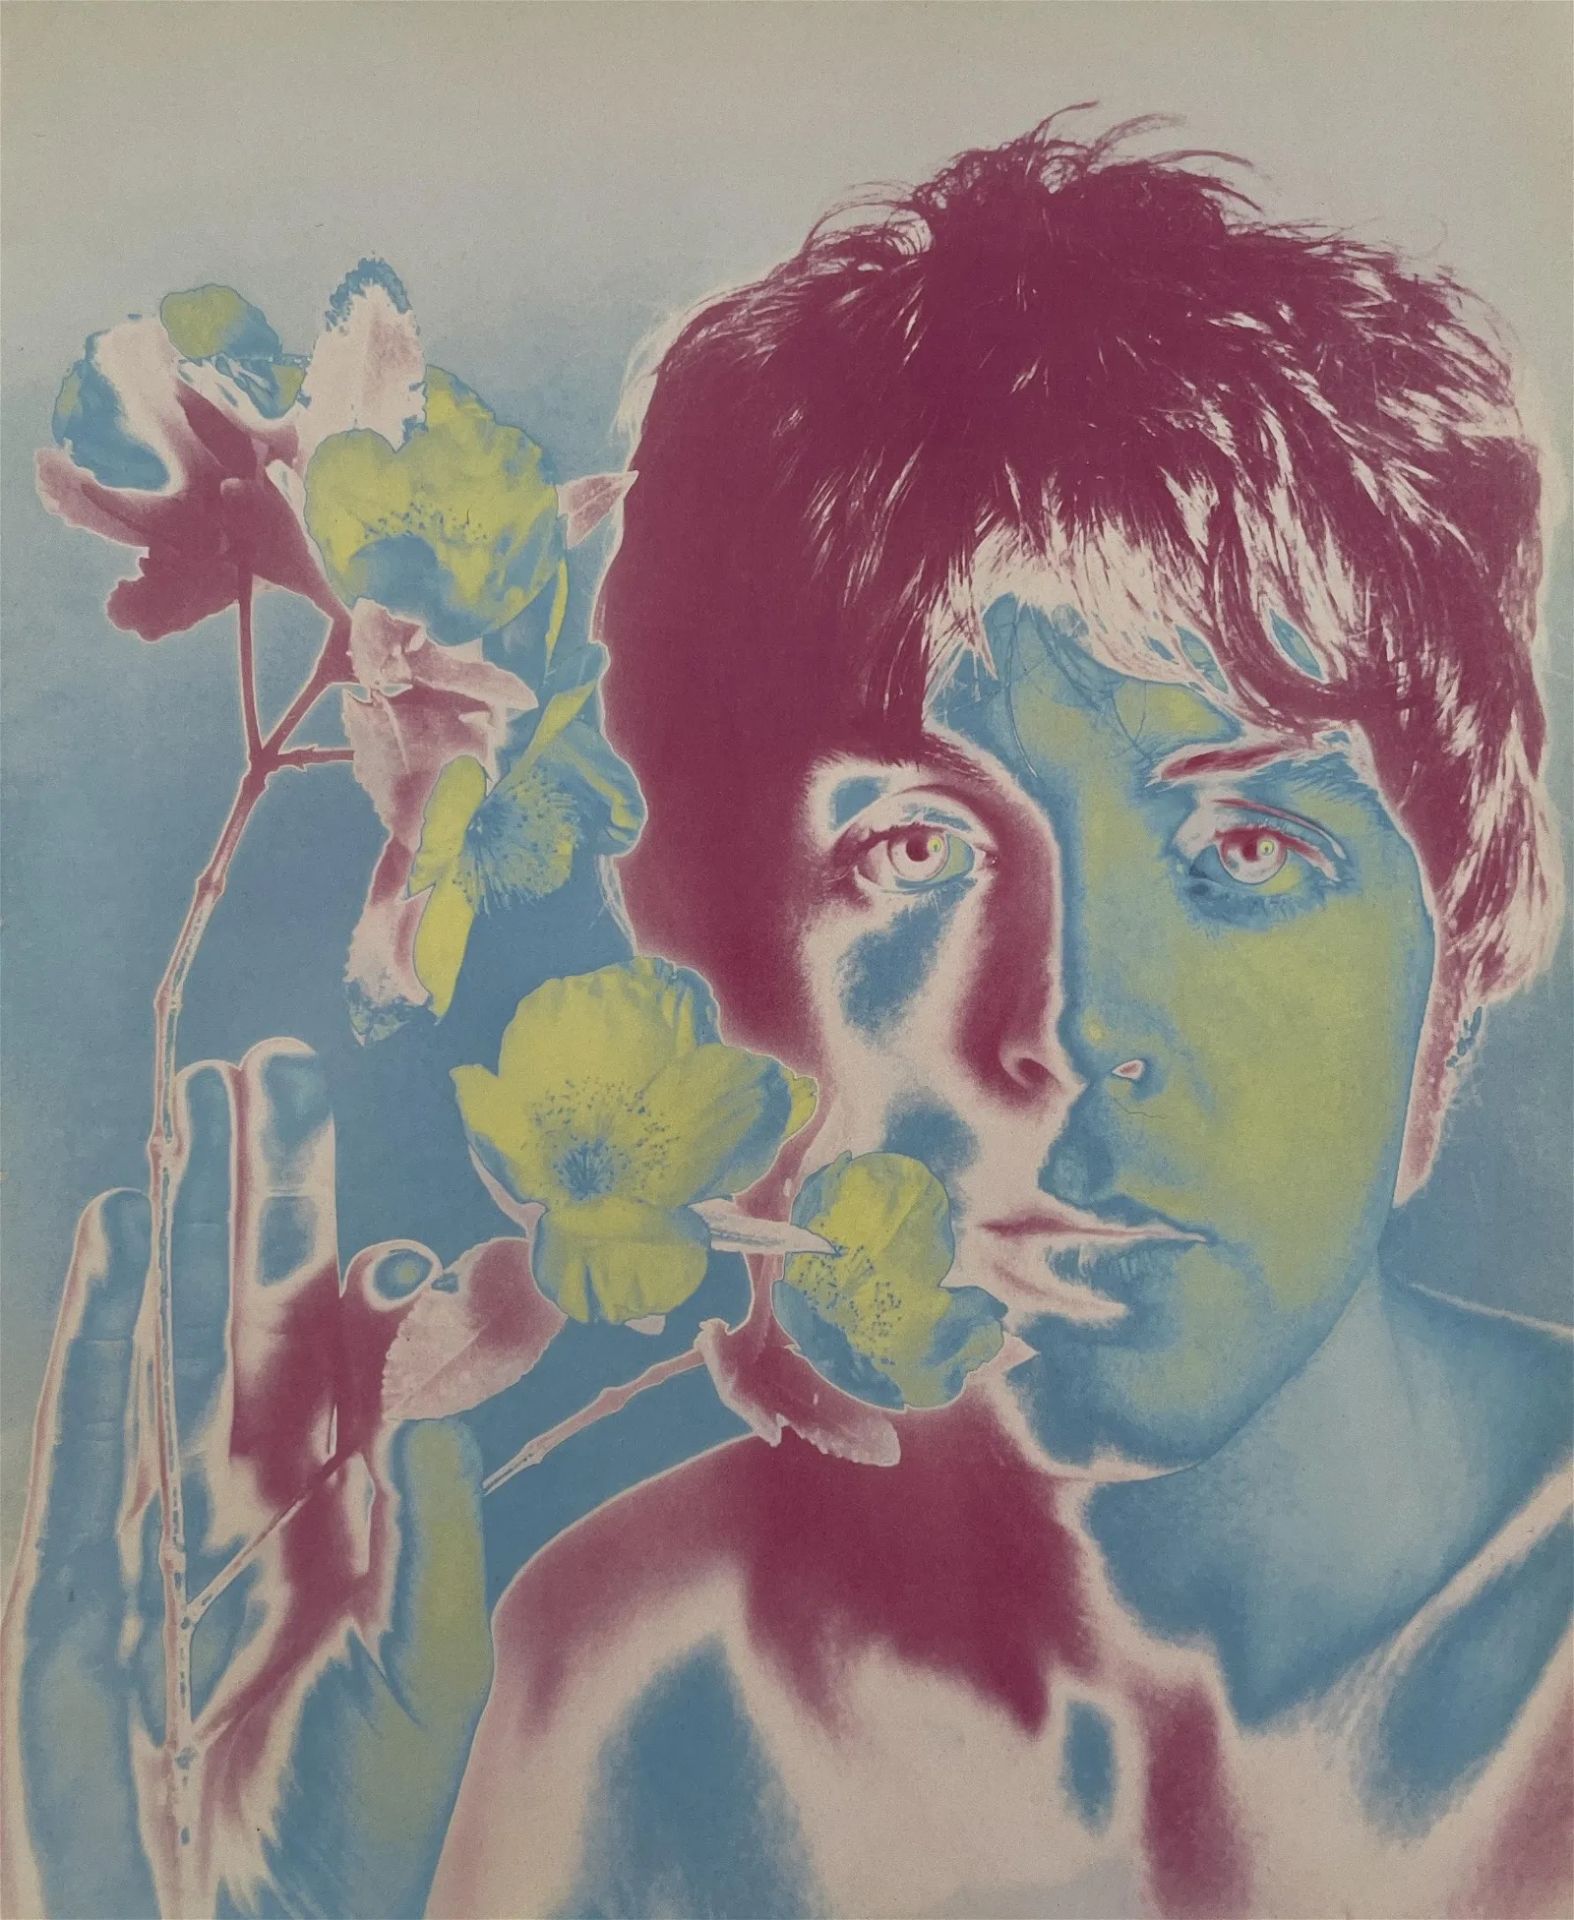 Richard Avedon "Paul McCartney, London" Print